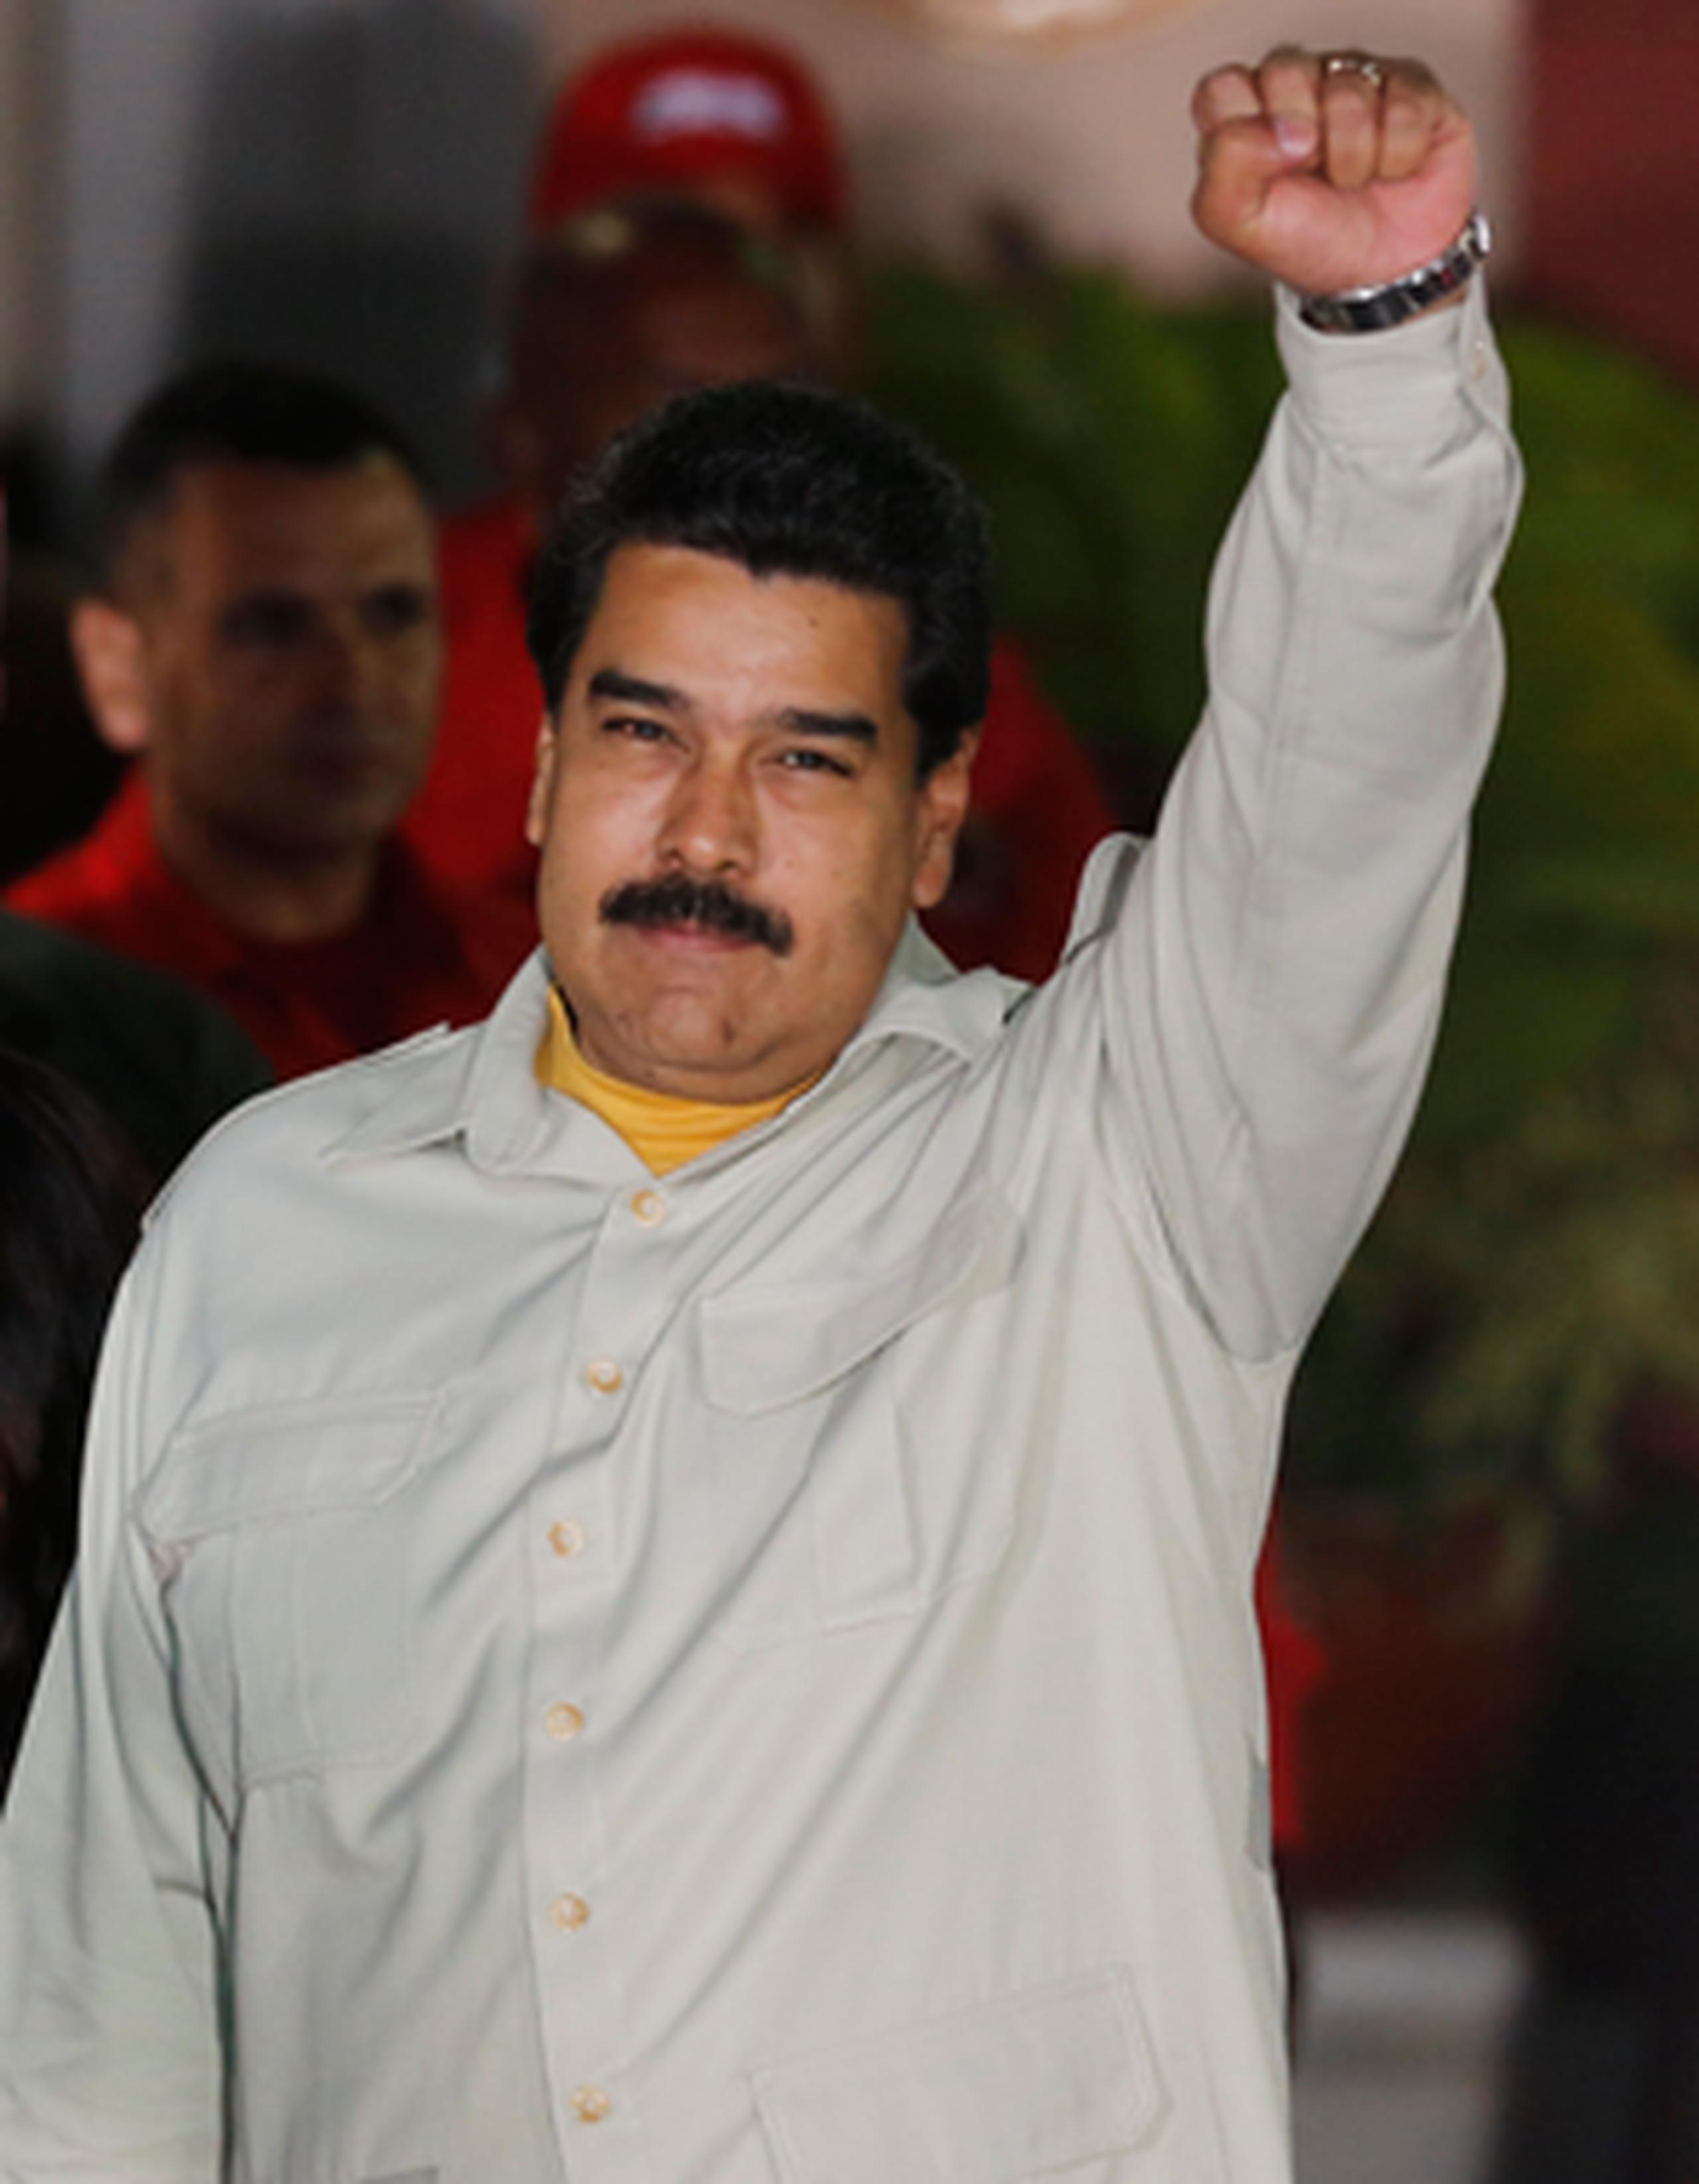 El presidente venezolano Nicolás Maduro acusó a Ledezma de estar implicado en actividades de conspiración. (AP)